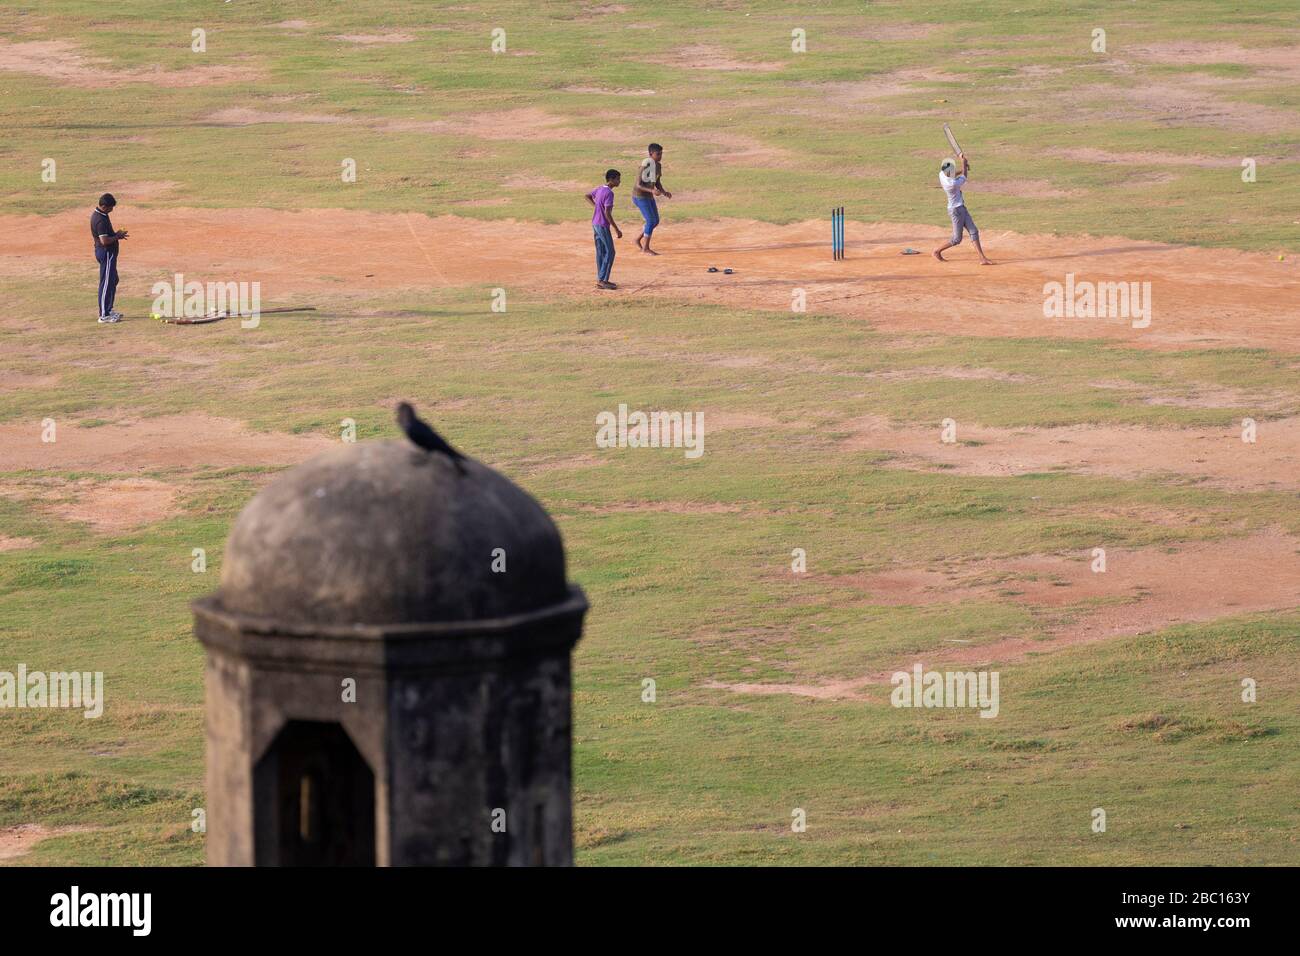 Locals playing a social game of cricket art Samanala Ground, Galle, Sri Lanka Stock Photo